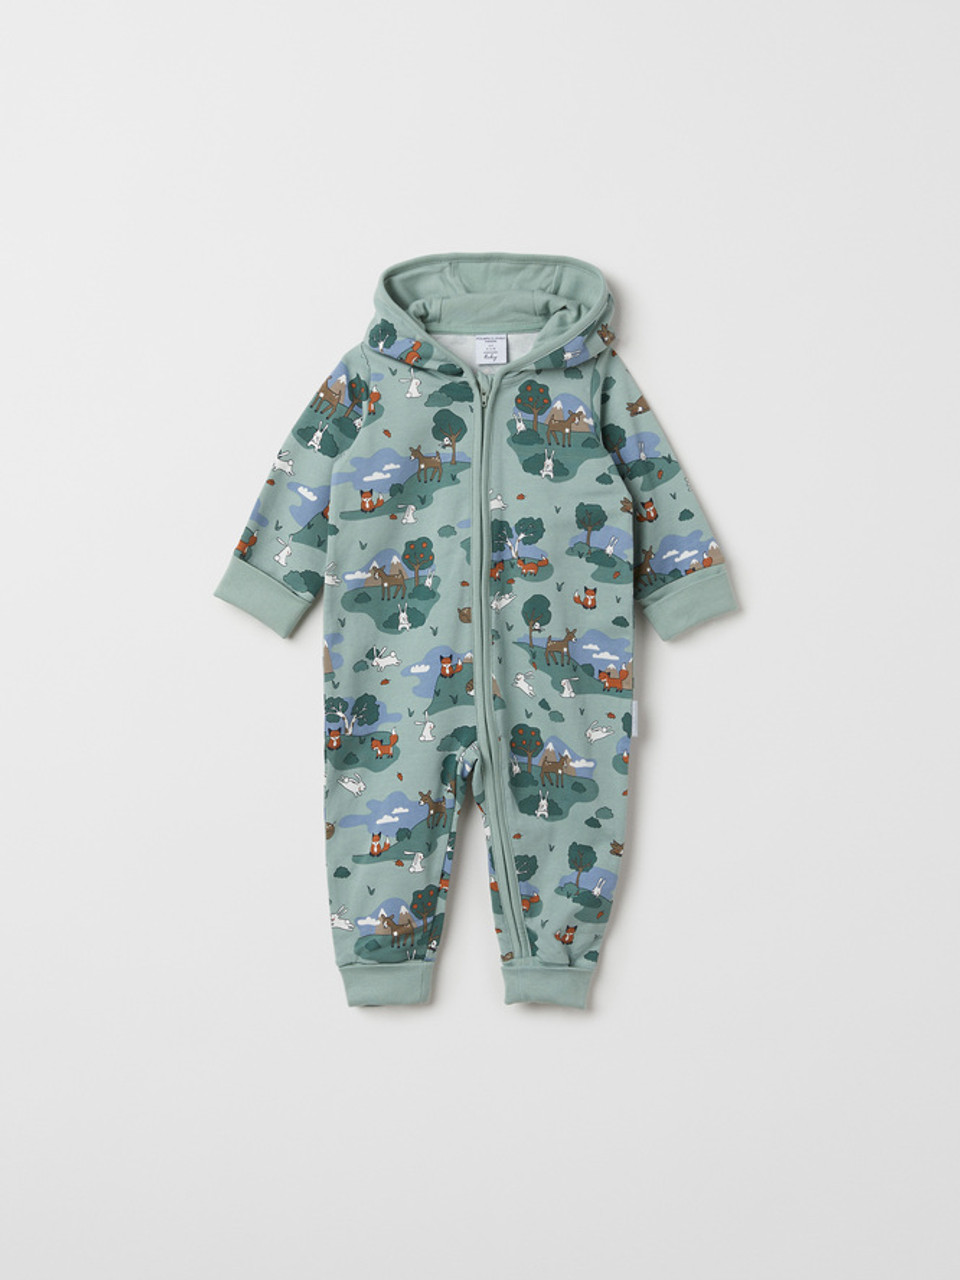  KESYOO Toddler Bodysuit Extender Baby Jumpsuits